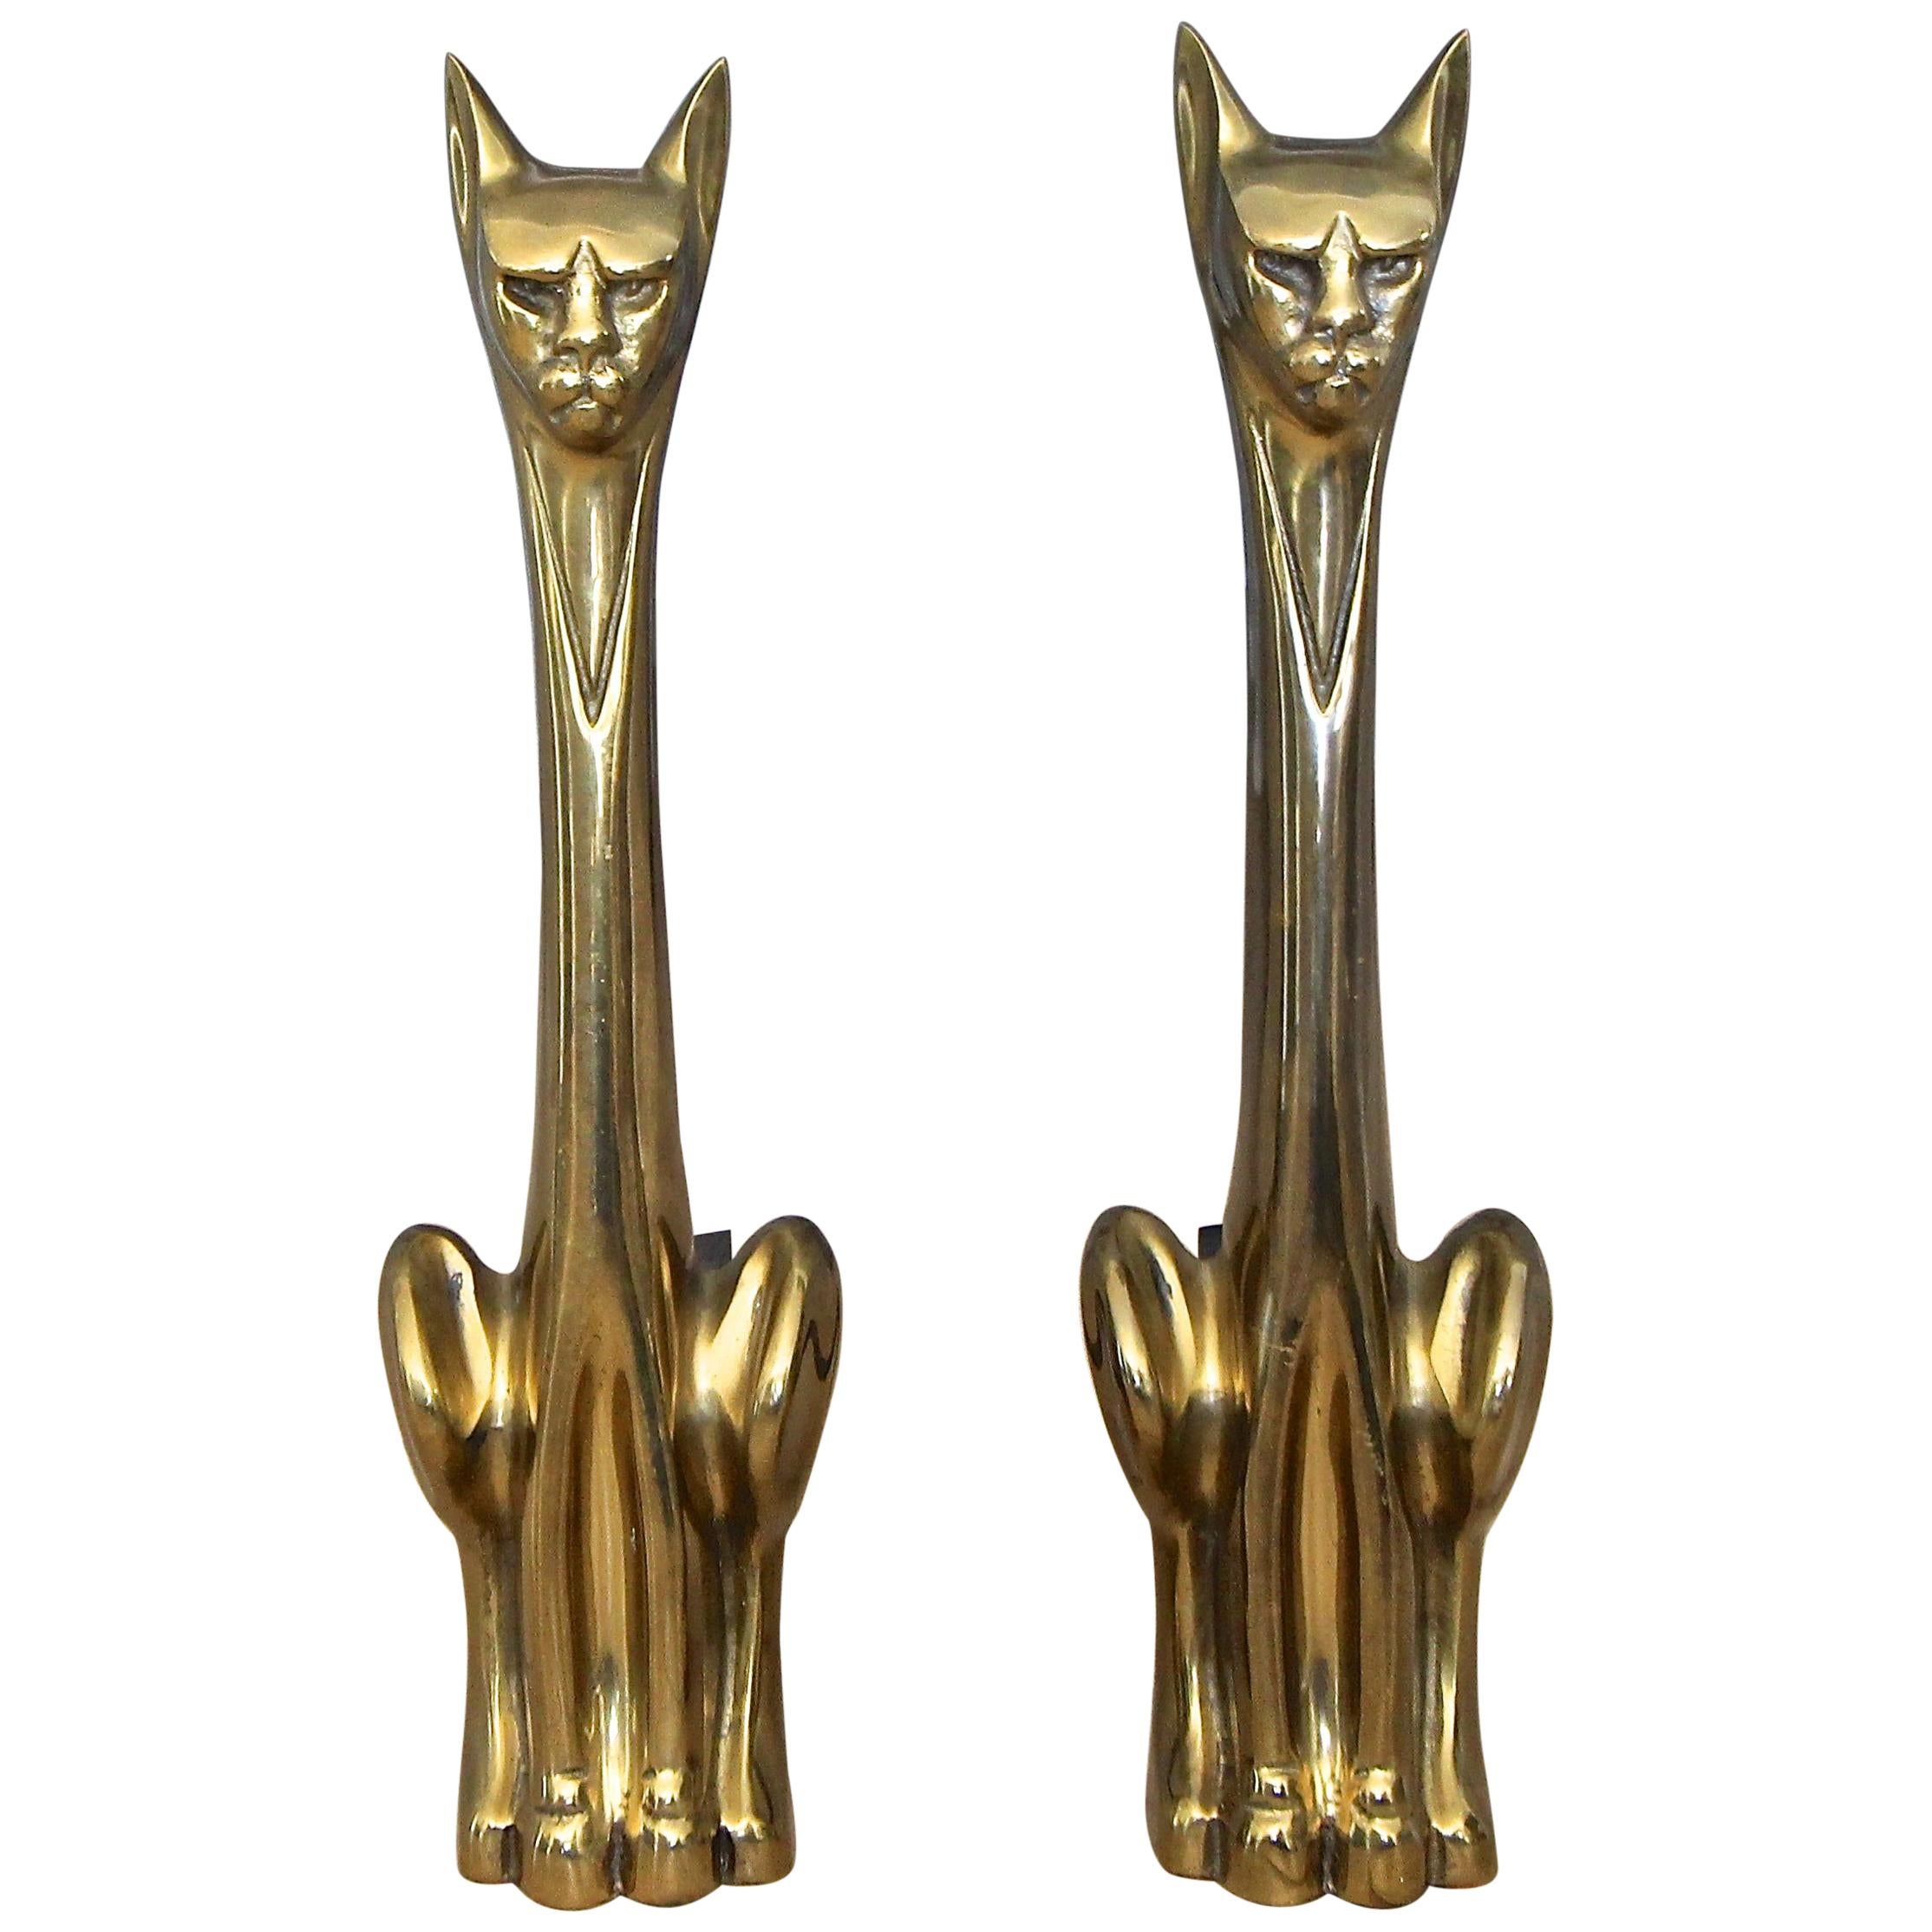 Pair of Tall Stylized Siamese Cat Midcentury Brass Andirons